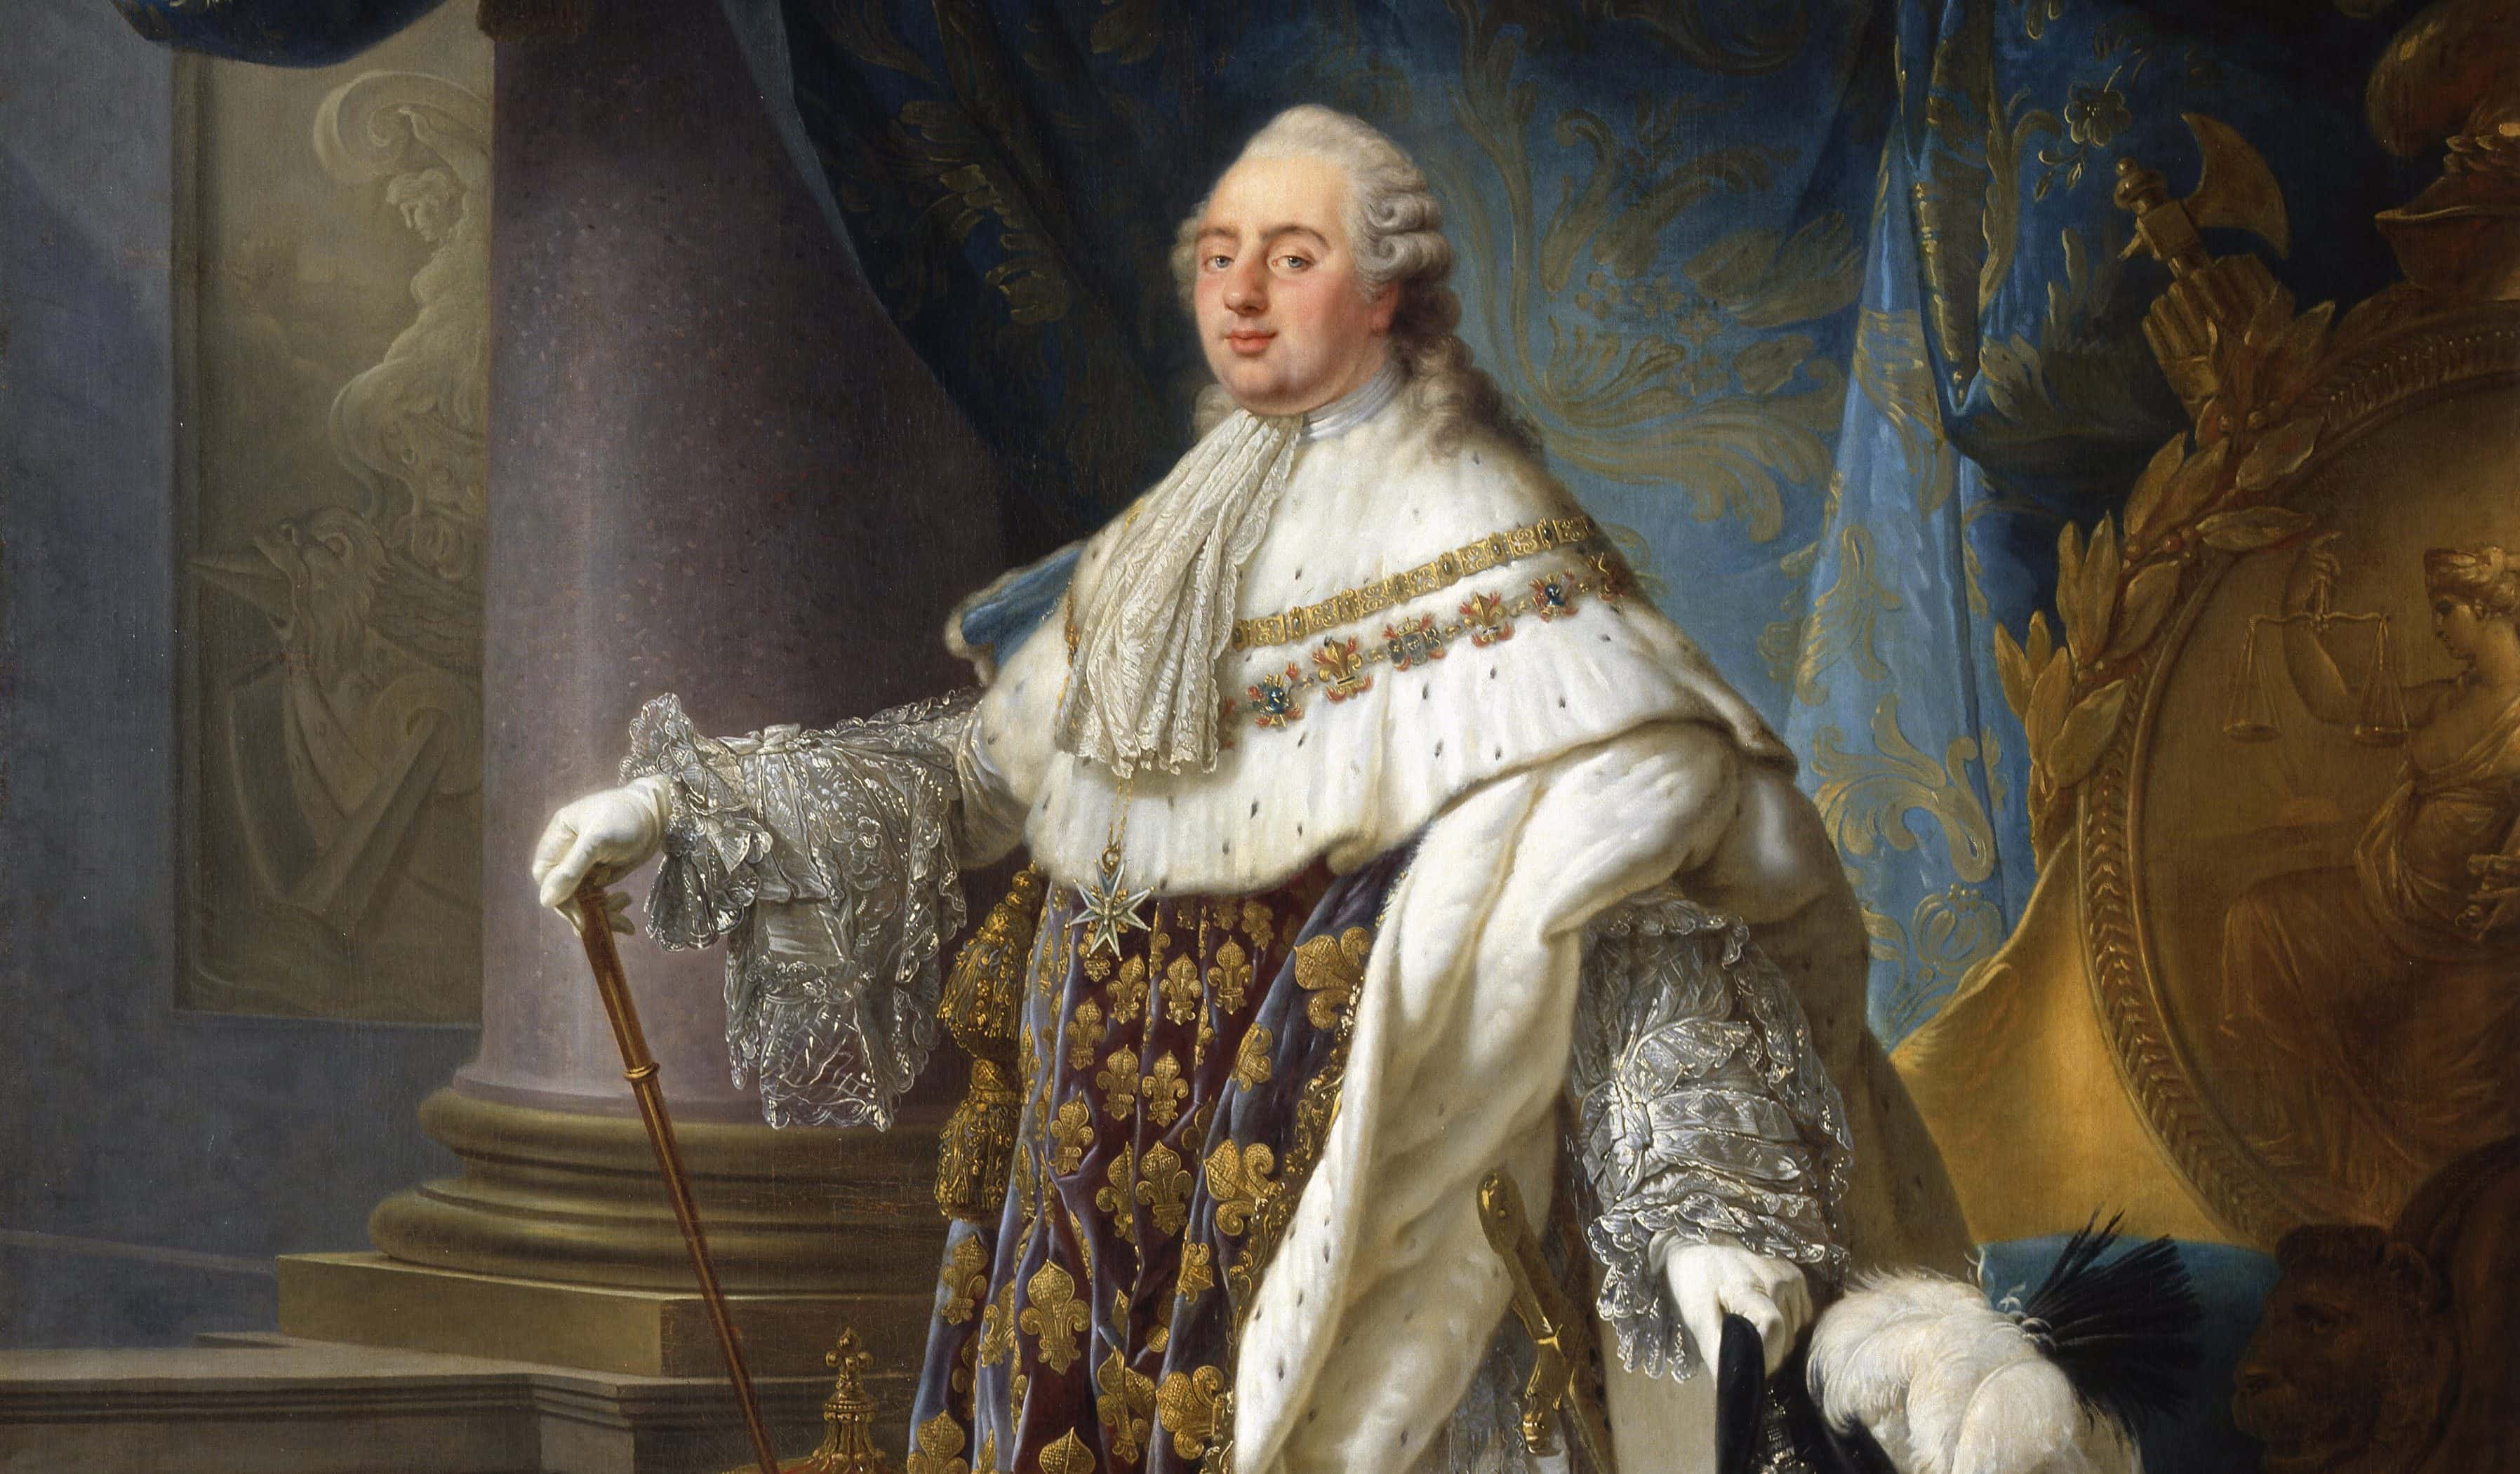 King louis xiv accomplishments. 7 Fascinating Facts About King Louis XIV. 2019-02-15